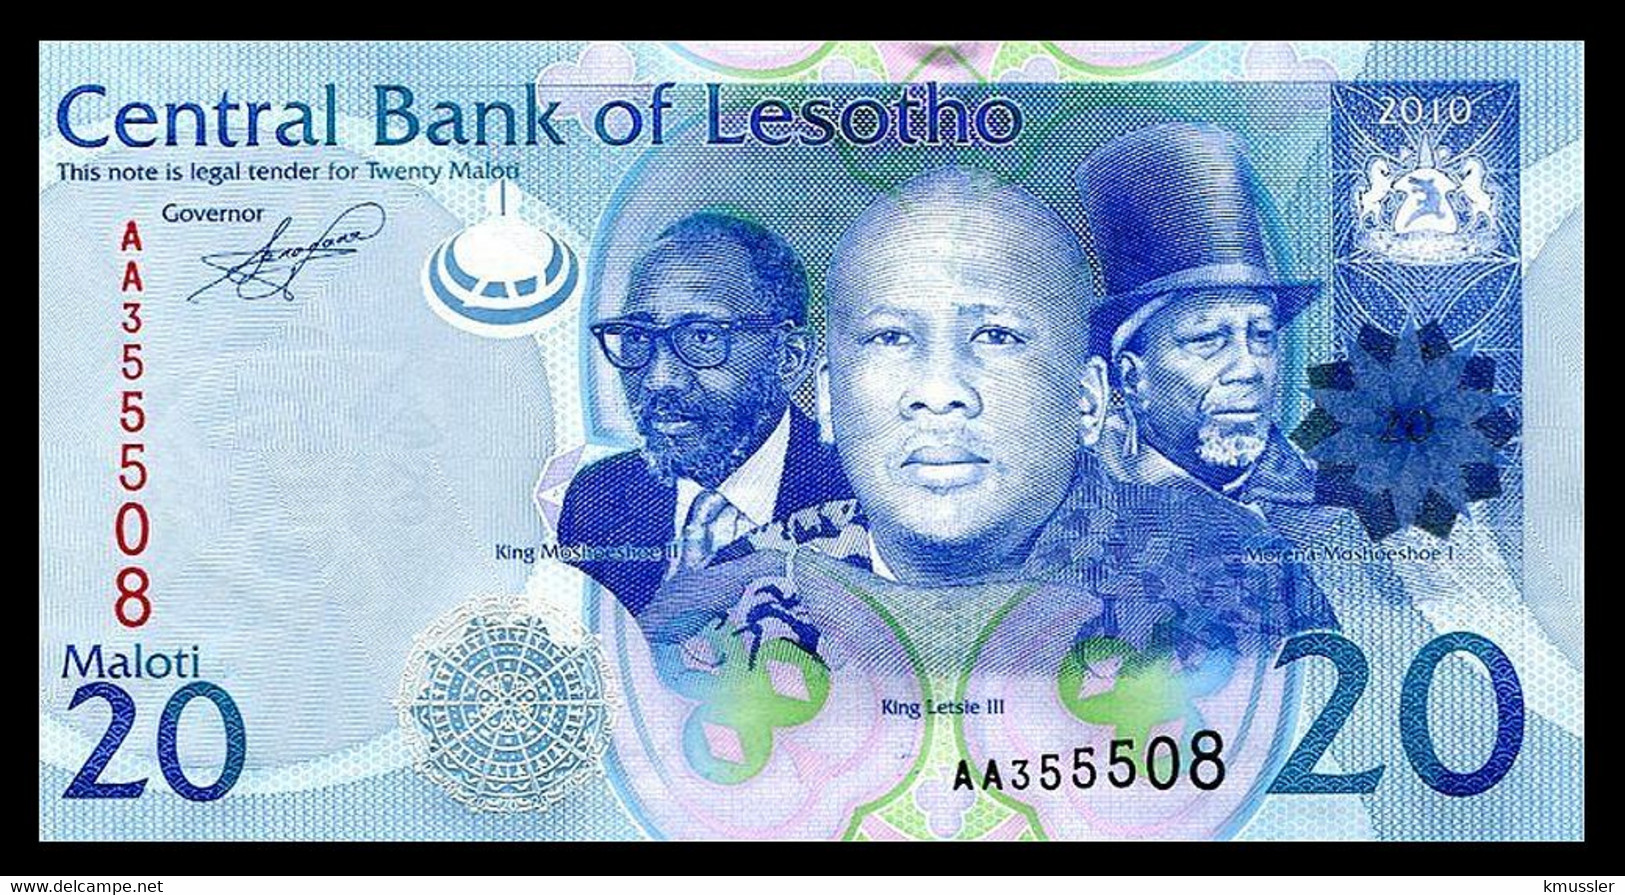 # # # Banknote Aus Lesotho 20 Maloti UNC # # # - Lesotho